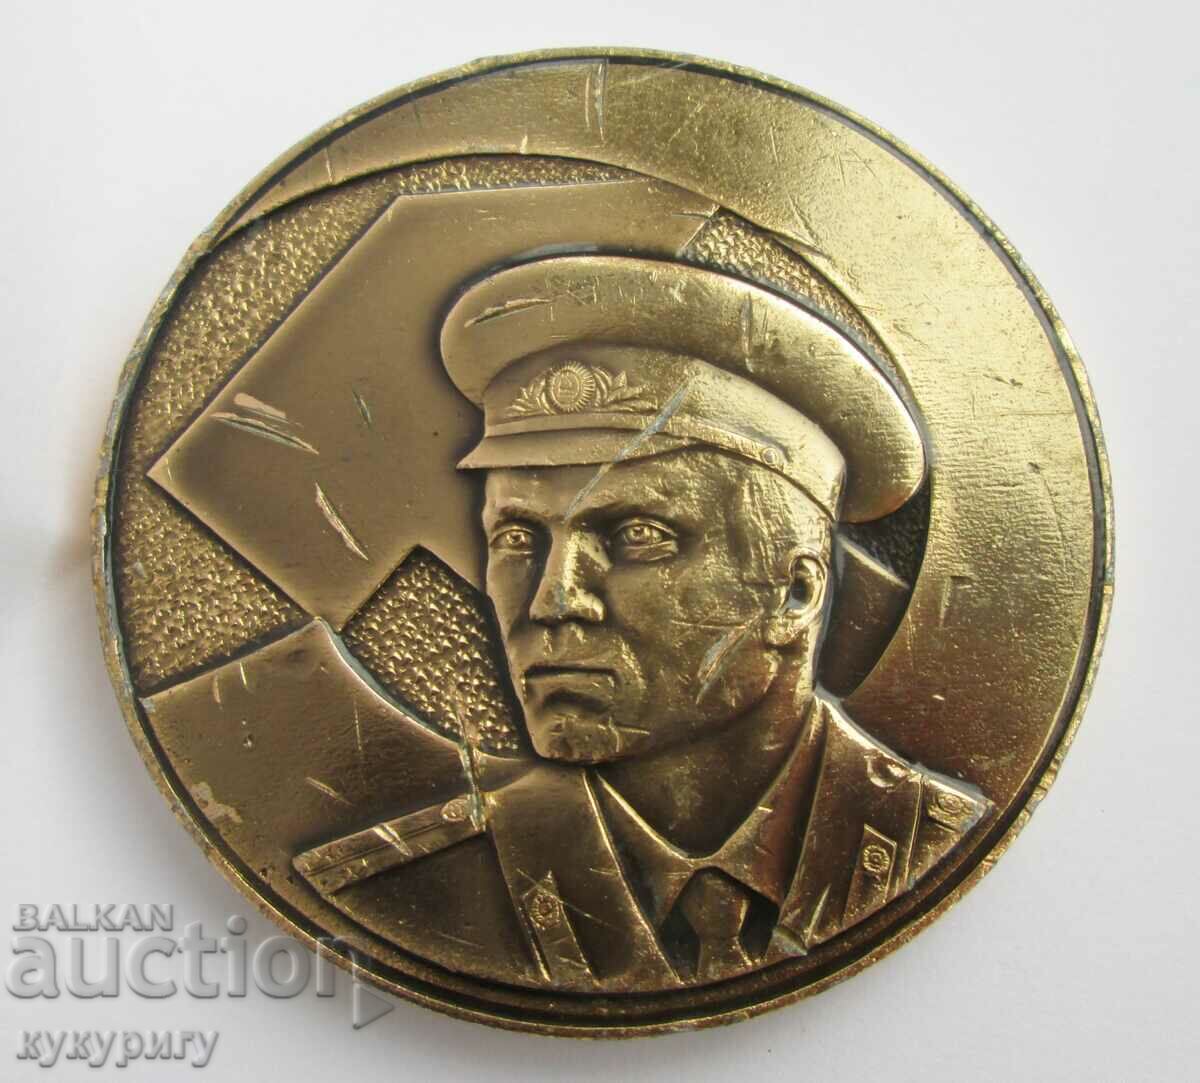 Star Sots USSR desktop medal plaque 60 years Soviet militia Ministry of Internal Affairs